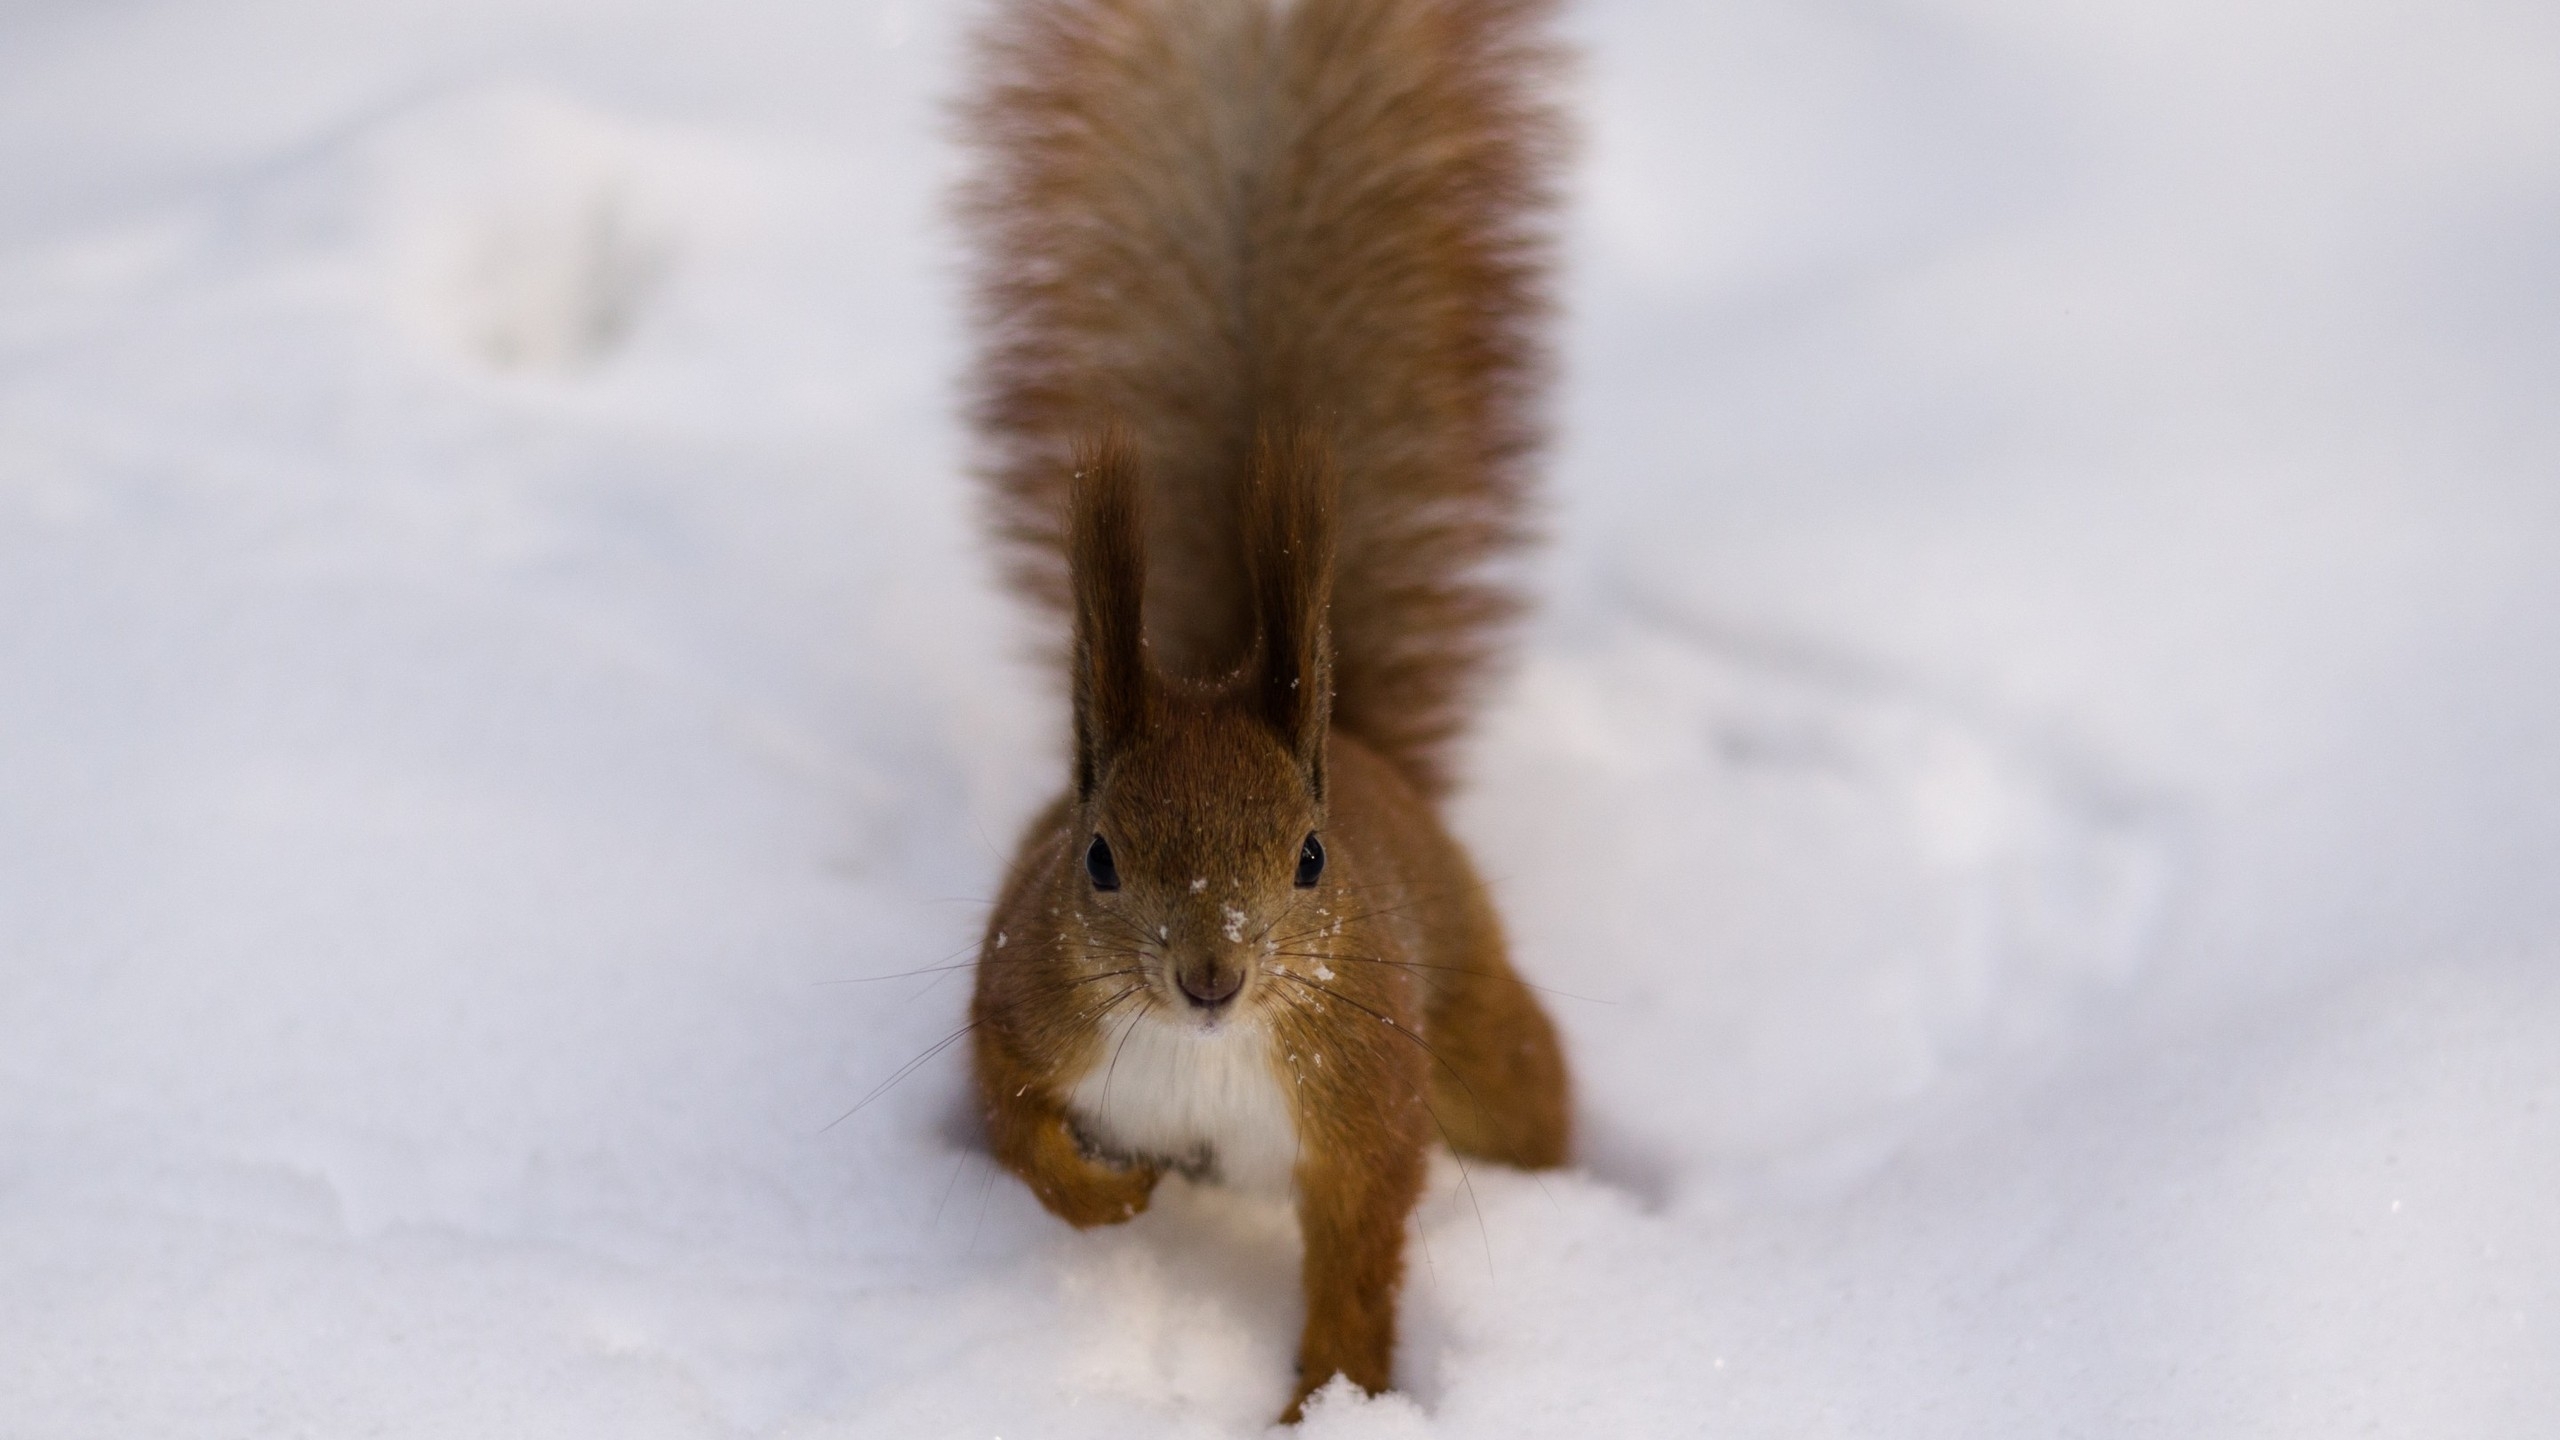 Fluffy Squirrel for 2560x1440 HDTV resolution